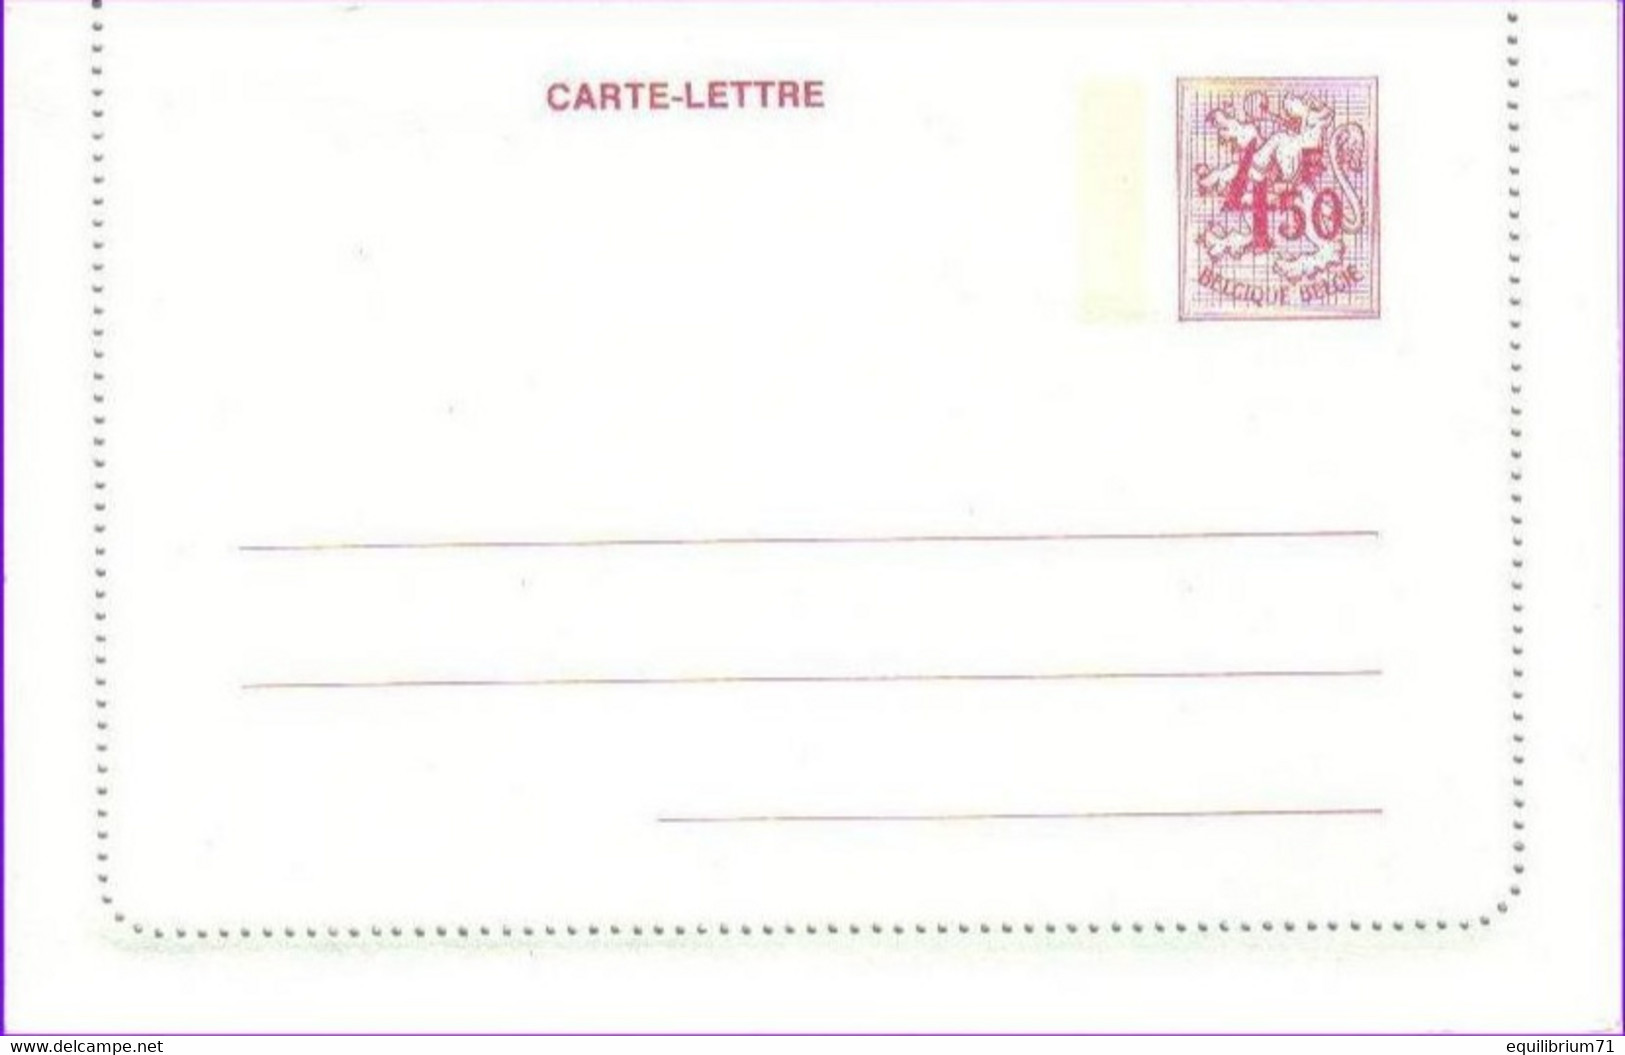 CL / KB 42F - 4,50fr - Carte-Lettre / Kaartbrief - 1972 - NEUF / NIEUW - Postbladen